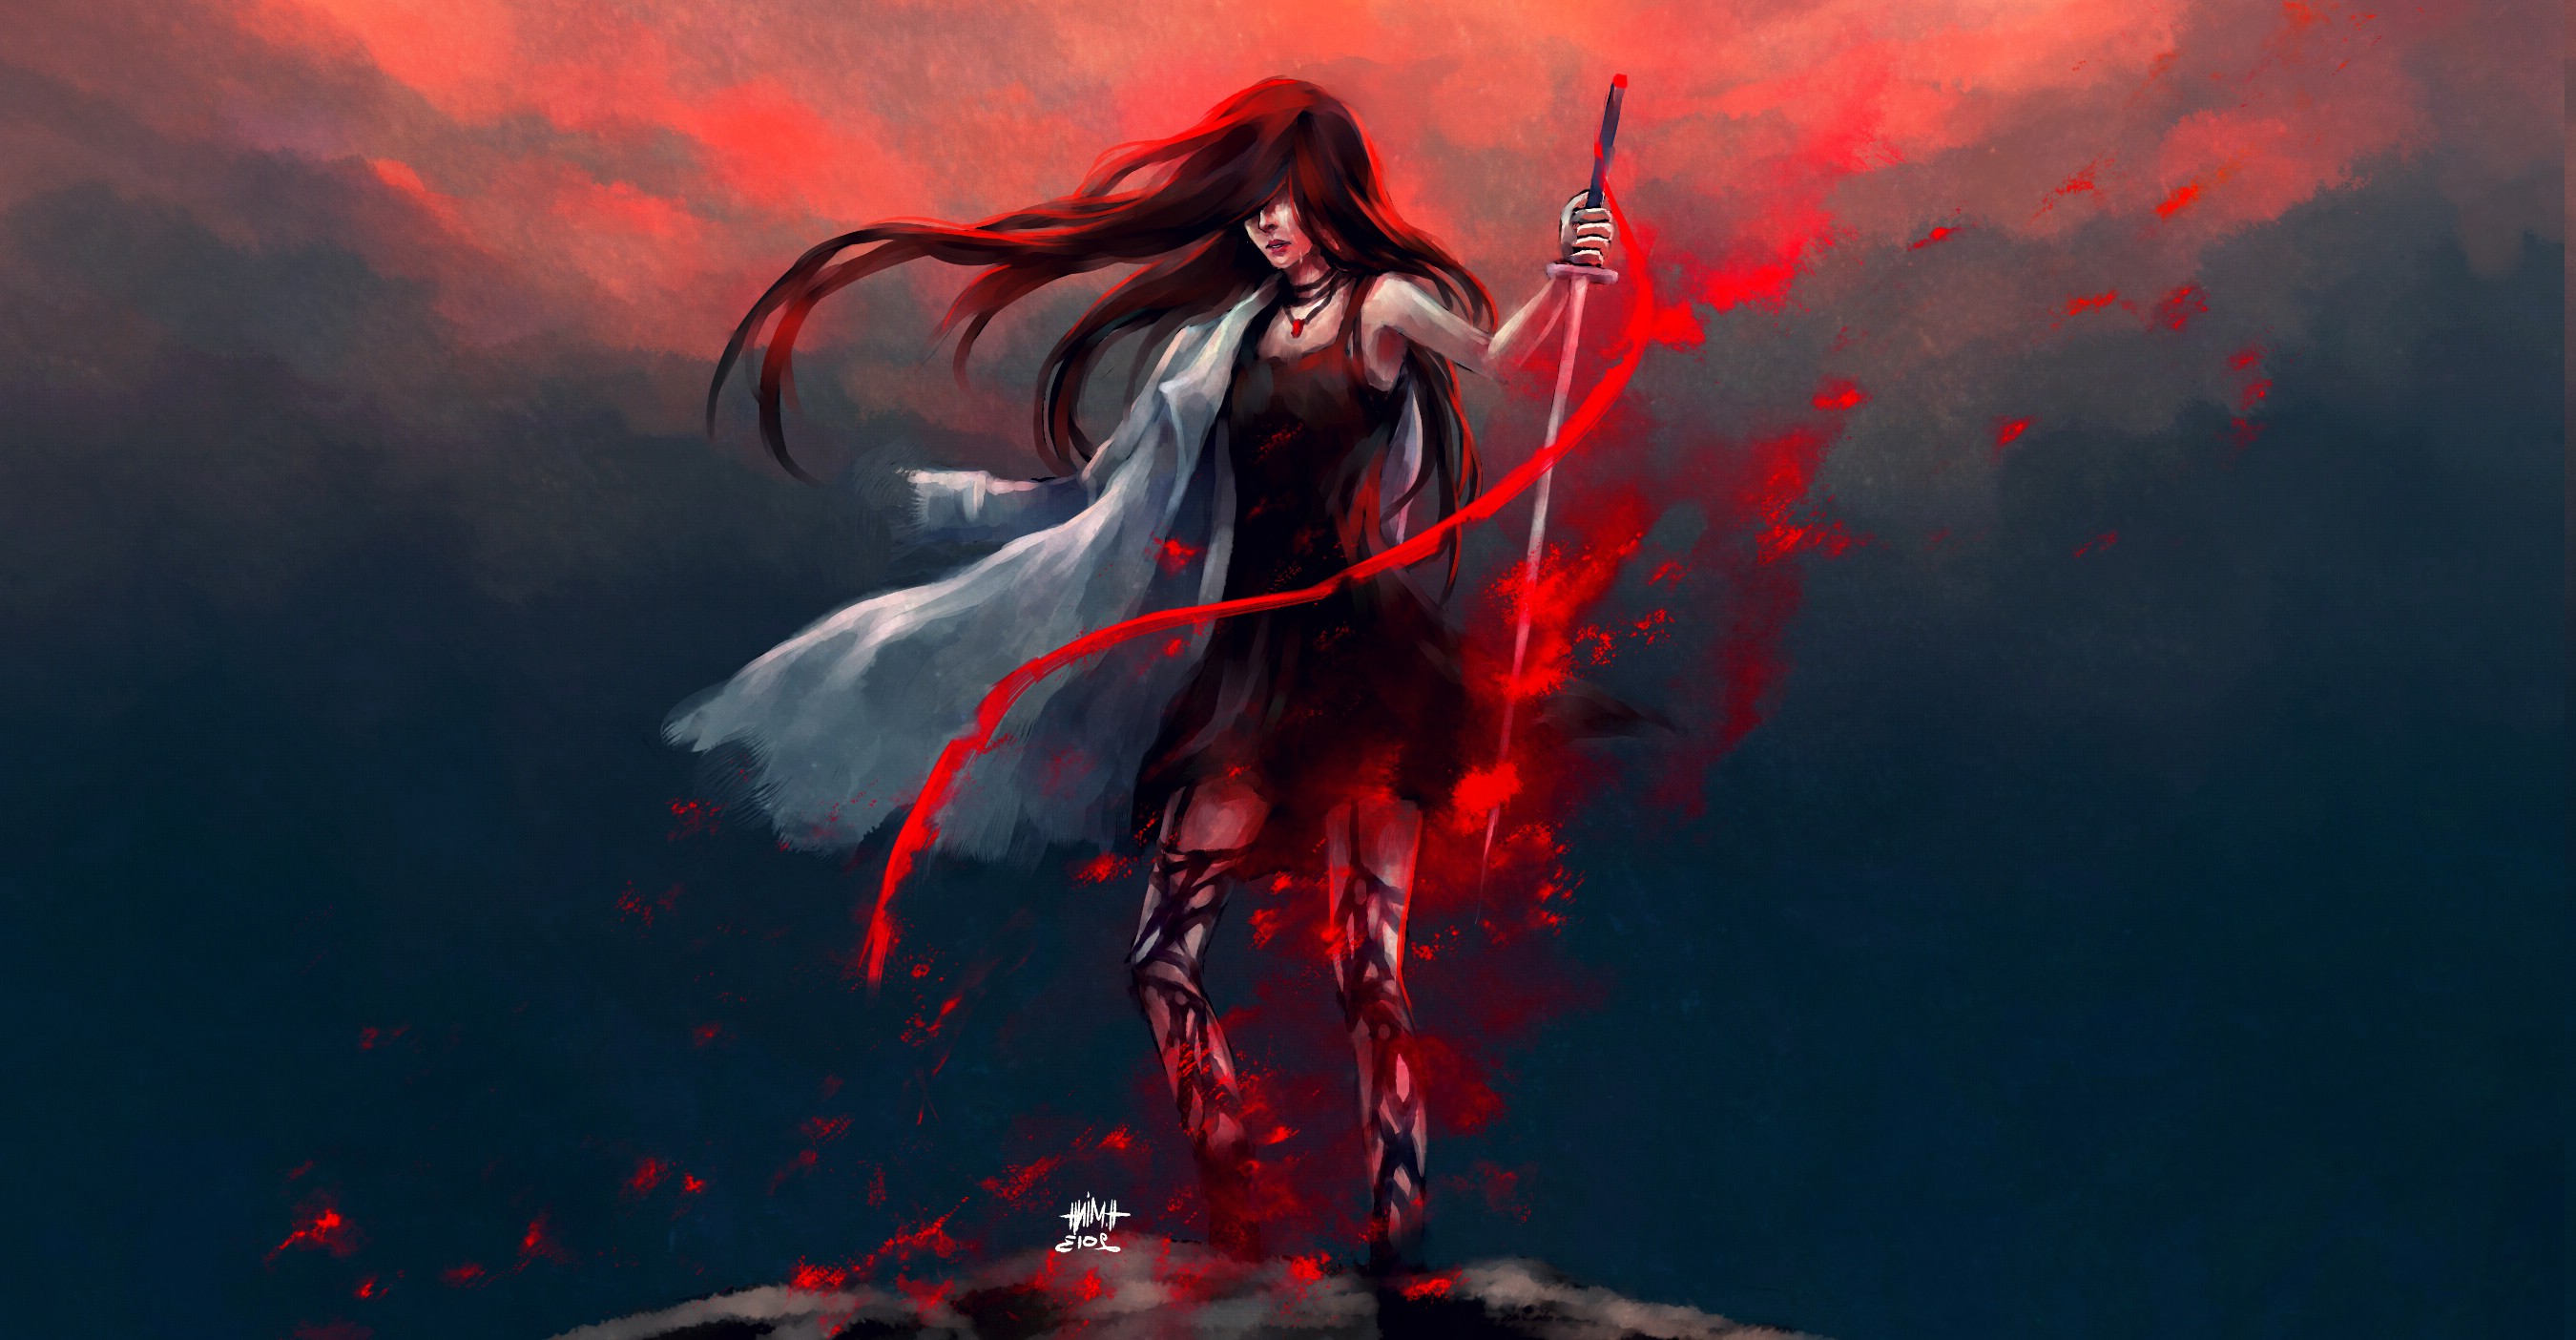 anime warrior wallpaper,cg artwork,red,demon,illustration,fictional character